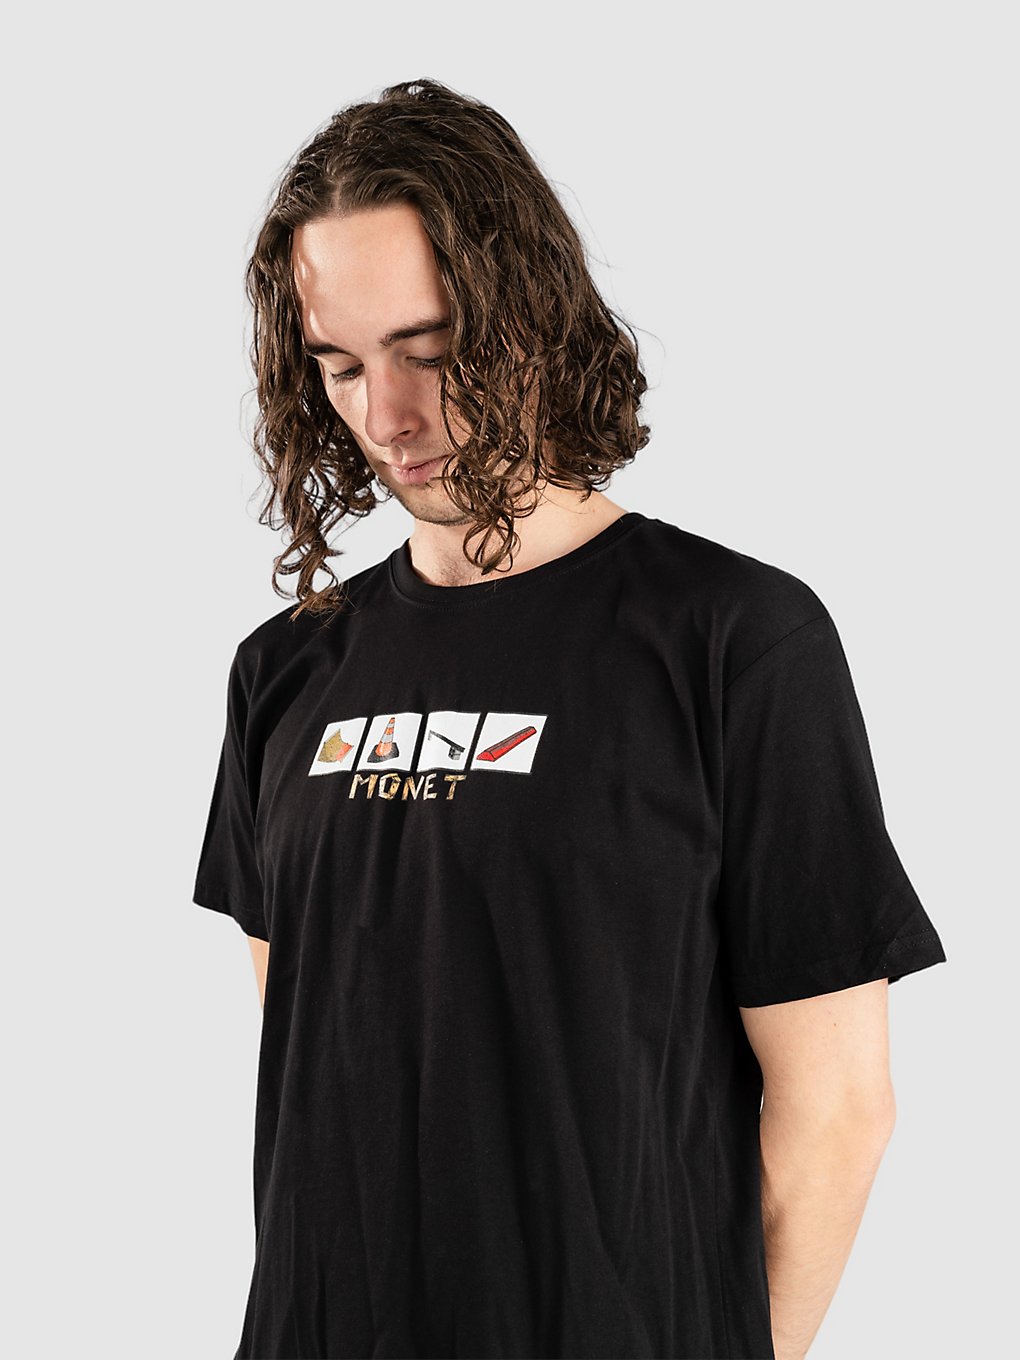 Monet Skateboards Dyi T-Shirt black kaufen